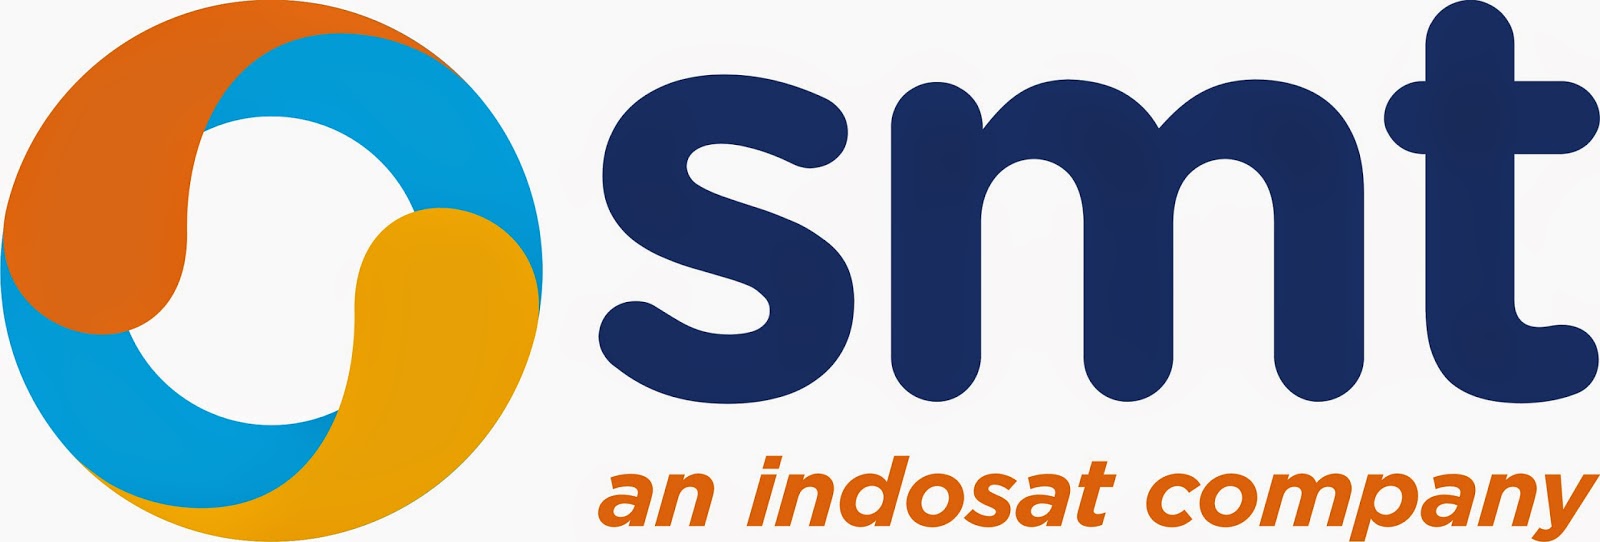 Lowongan Kerja Customer Service Indosat Bandung - Lowongan 